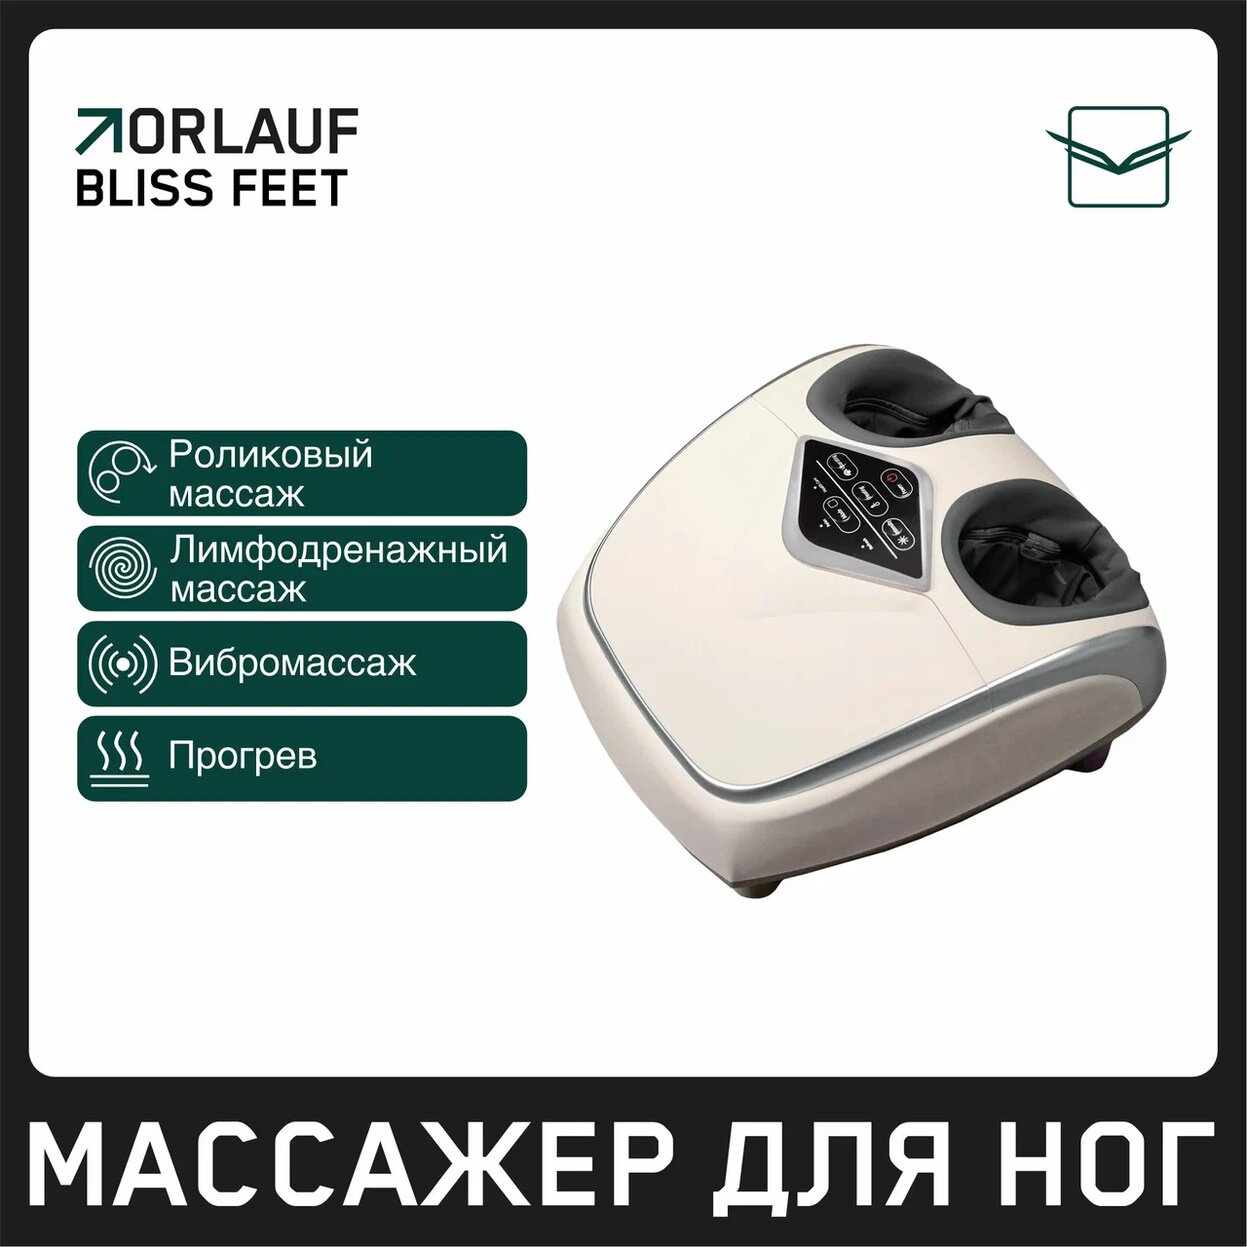 Orlauf Bliss Feet из каталога массажеров для ног в Москве по цене 27600 ₽